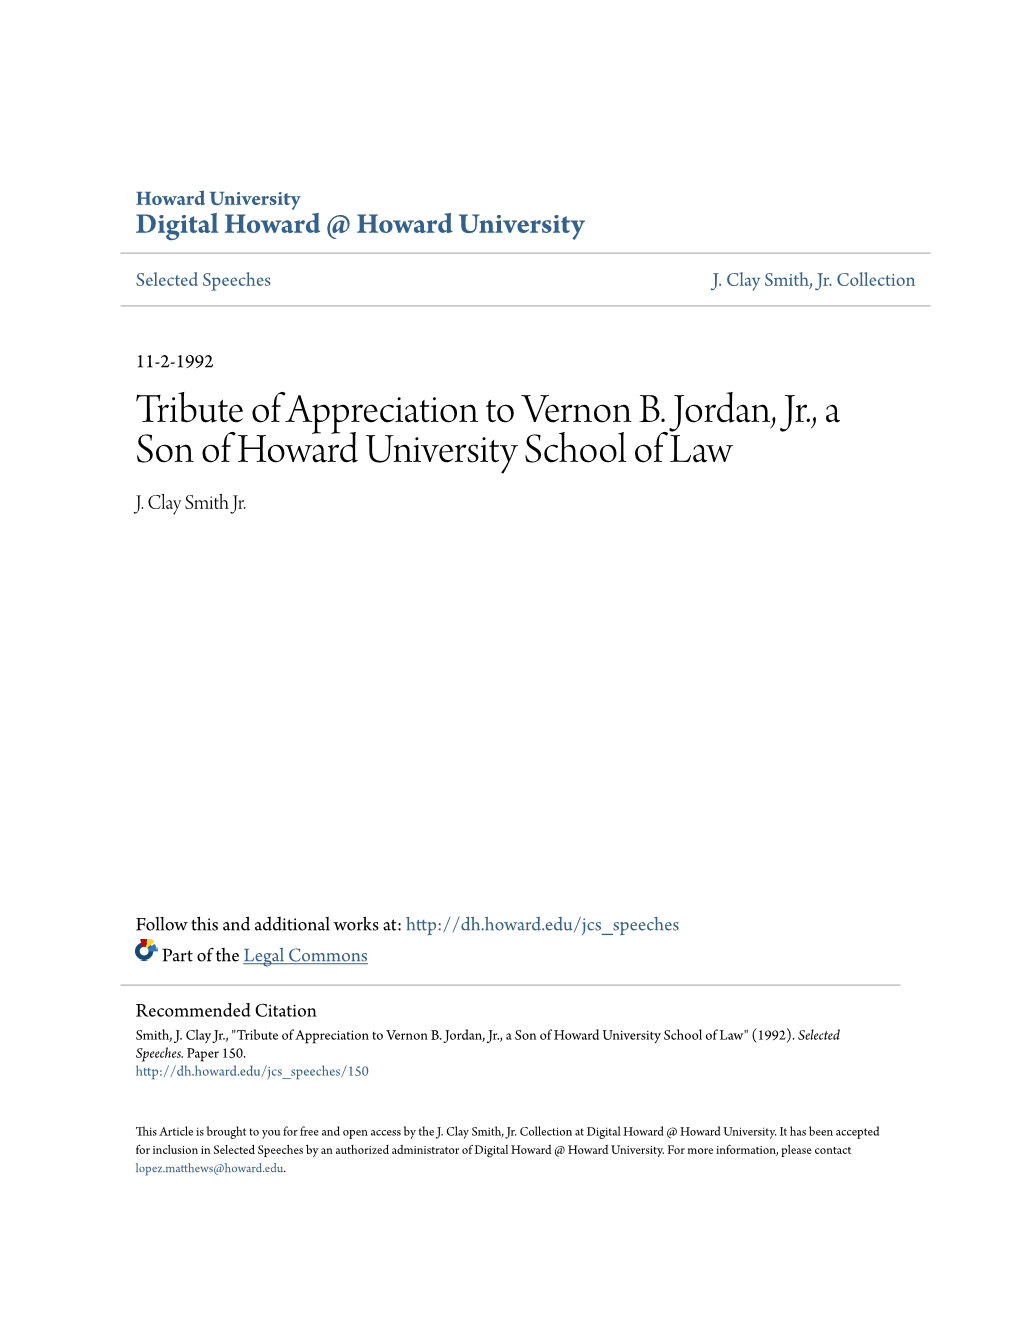 Tribute of Appreciation to Vernon B. Jordan, Jr., a Son of Howard University School of Law J